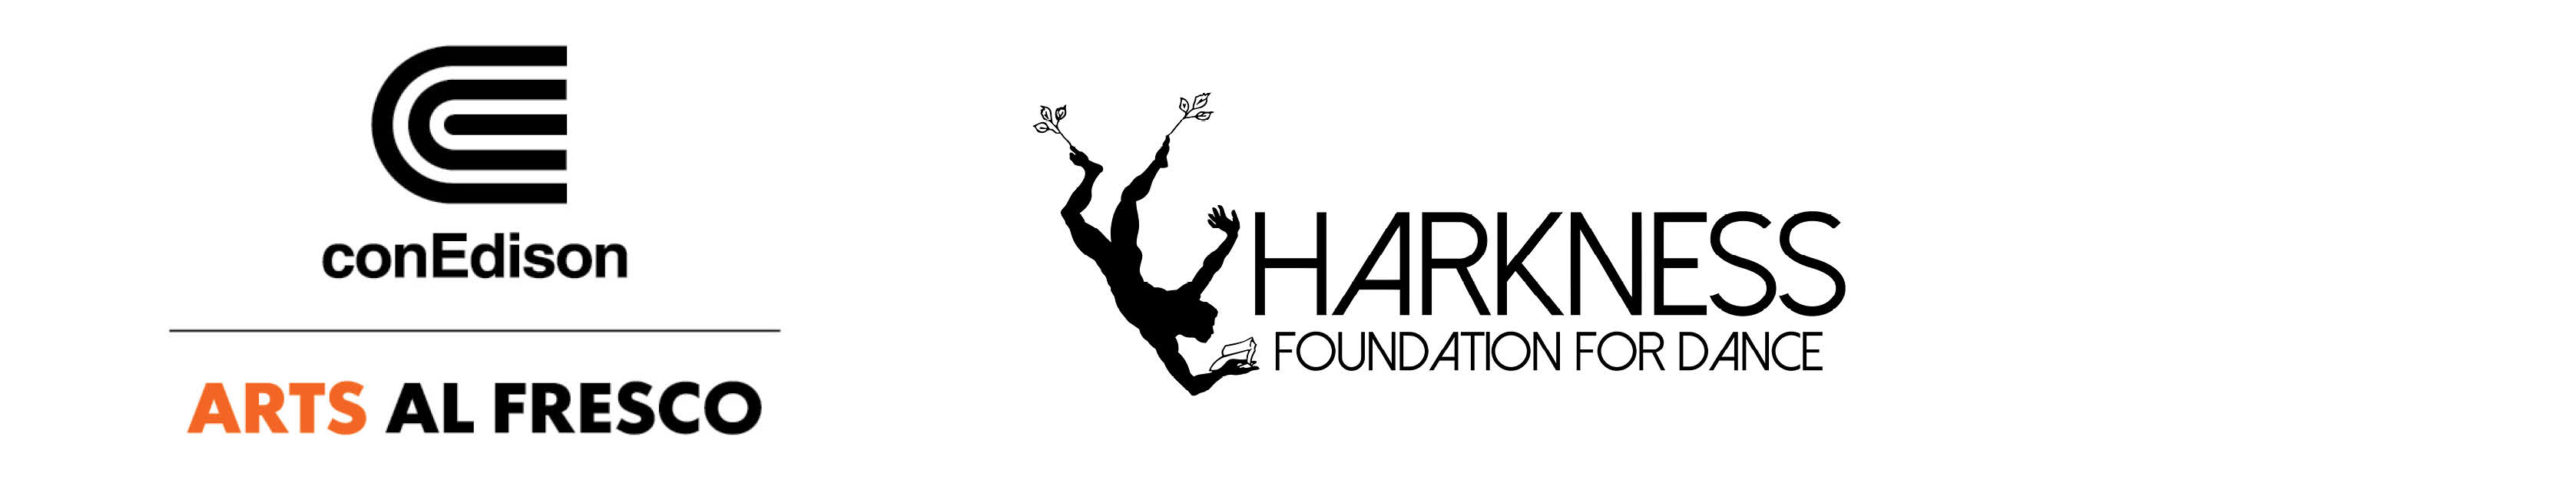 Logos: Con Edison Arts Al Fresco & Harkness Foundation for Dance